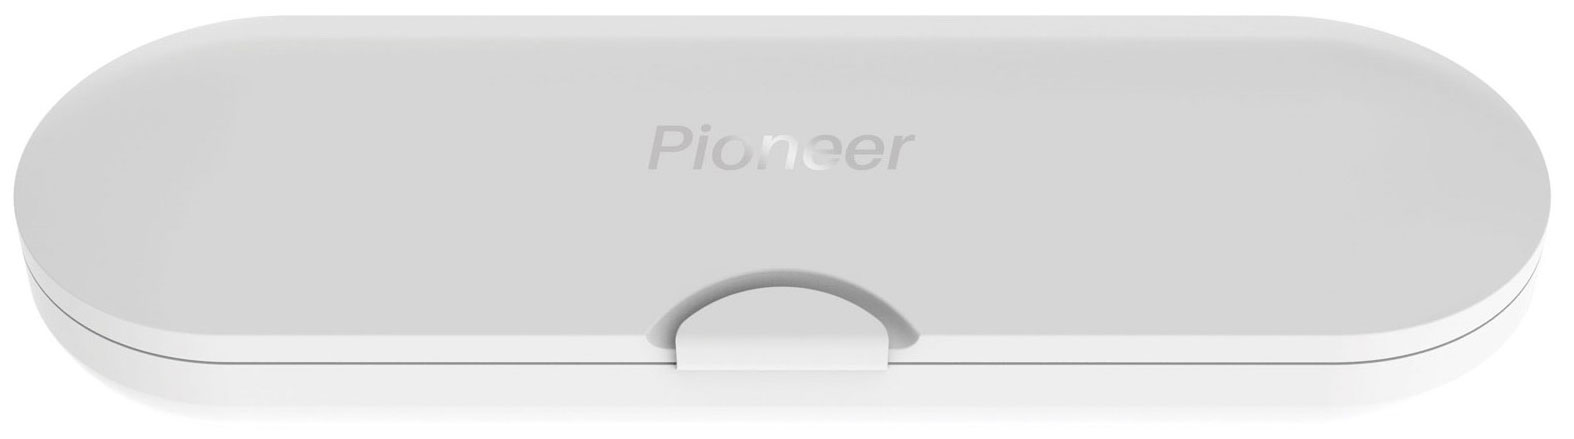 Зубная щетка Pioneer TB-5020 зубная щетка pioneer tb 1021